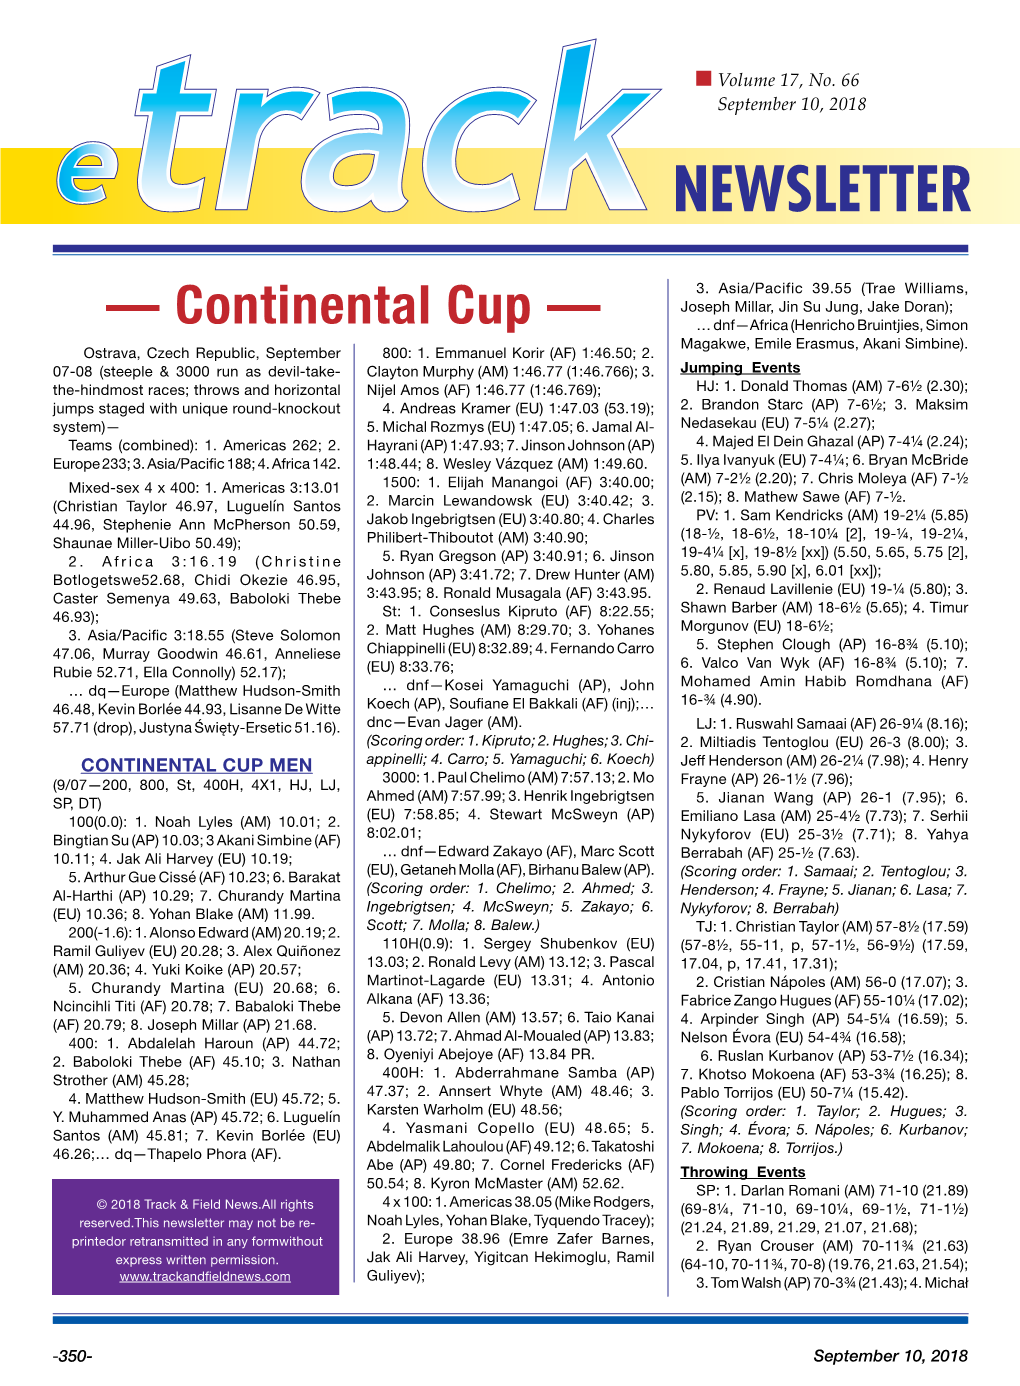 — Continental Cup — … Dnf—Africa (Henricho Bruintjies, Simon Magakwe, Emile Erasmus, Akani Simbine)